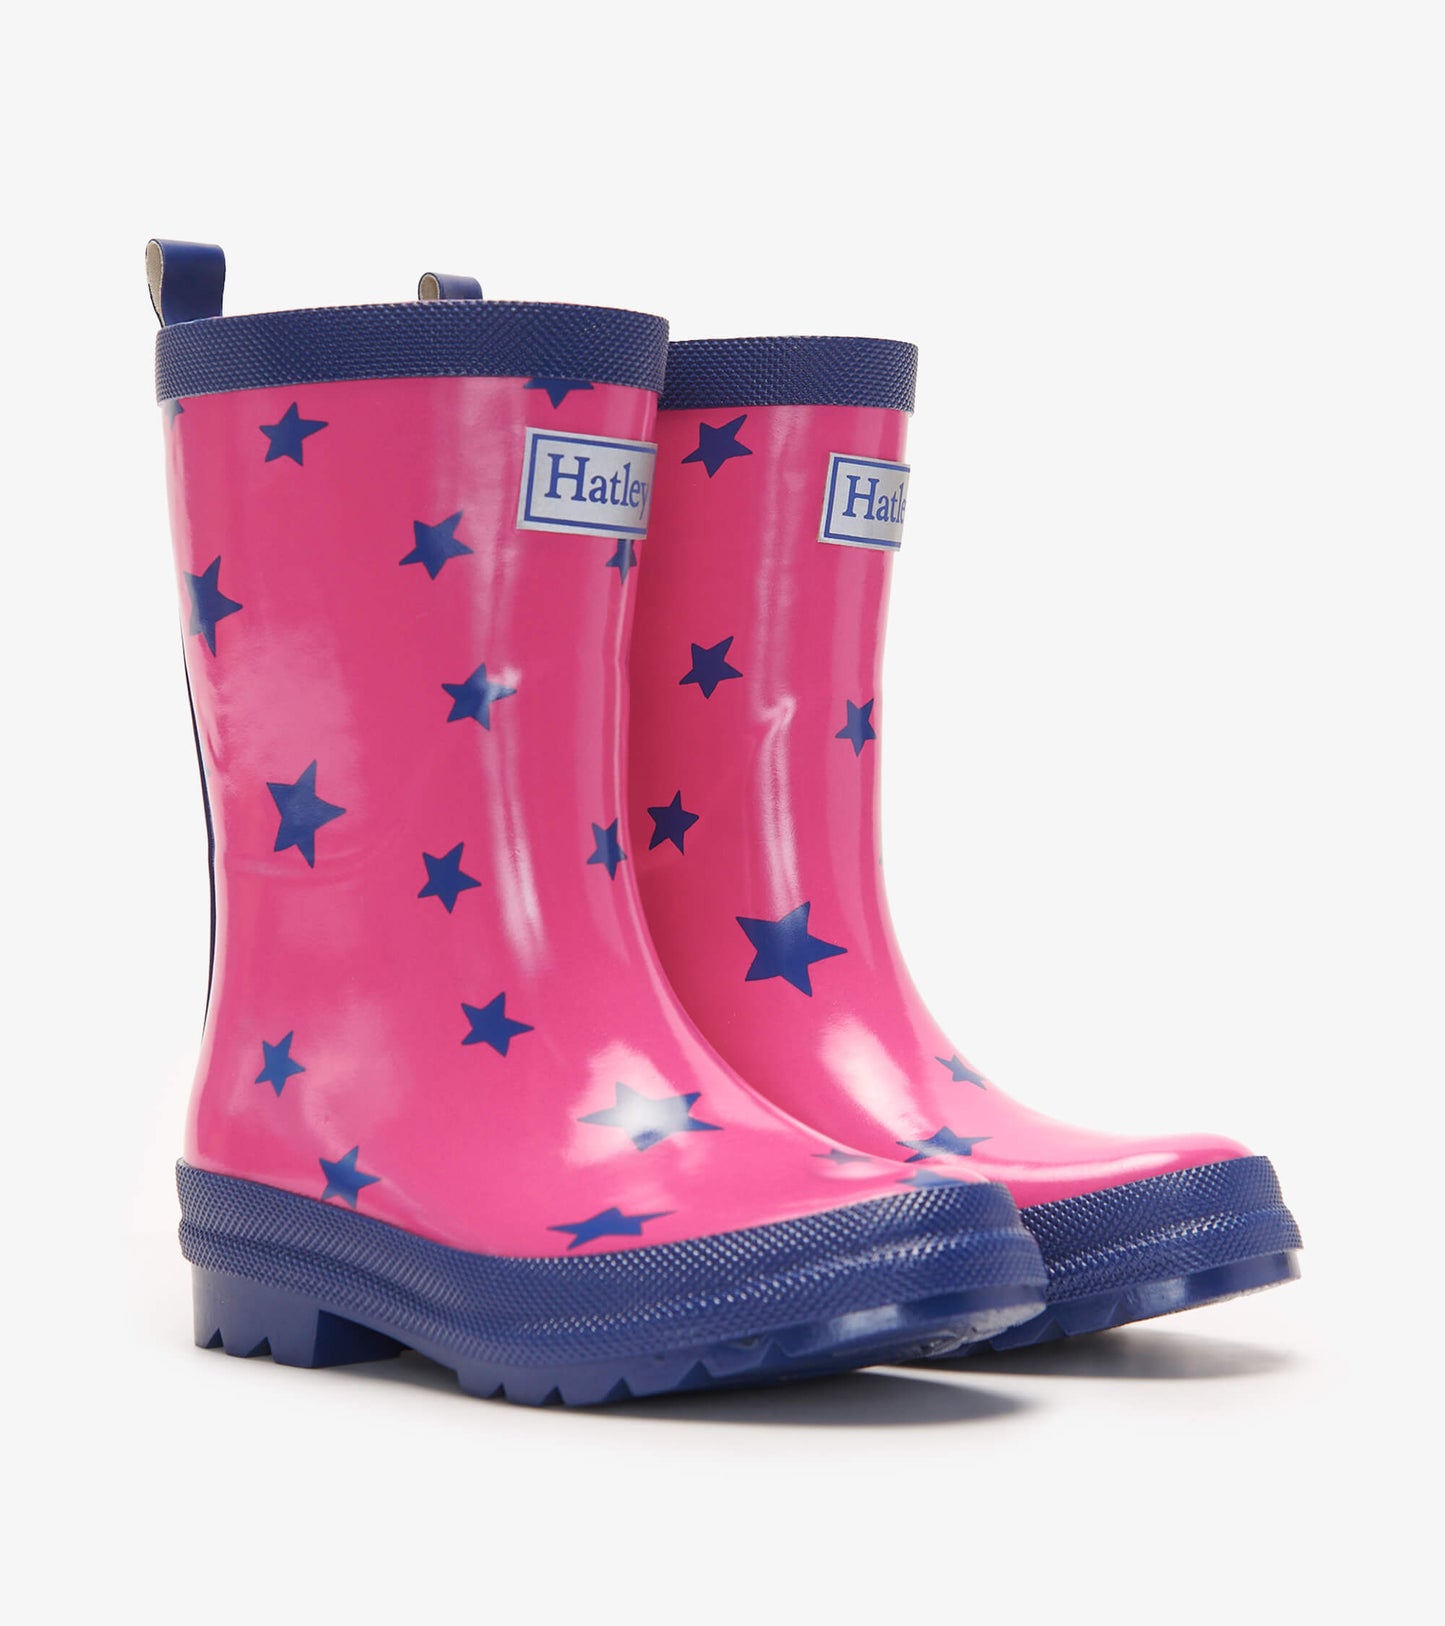 Hatley girls rain boots